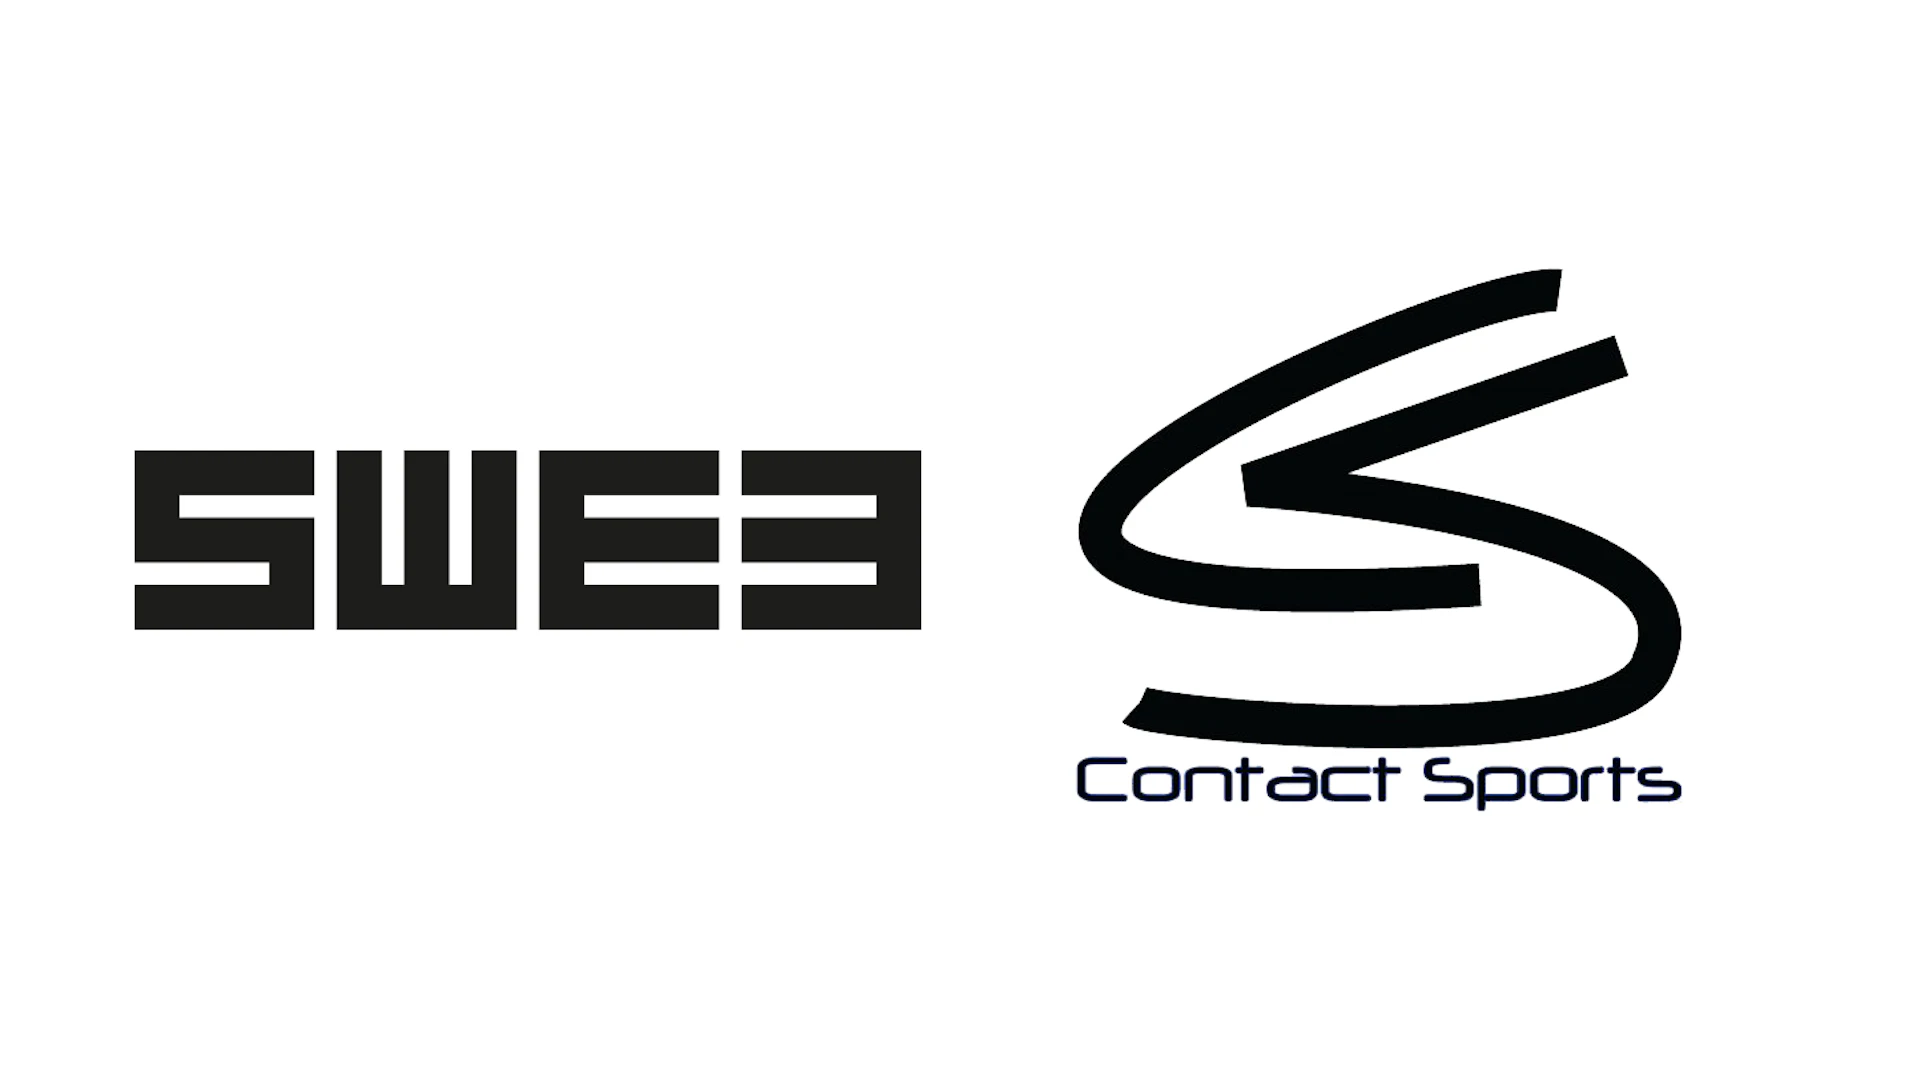 Contact Sports blir officiell partner till SWE3 - SWE3 thumbnail